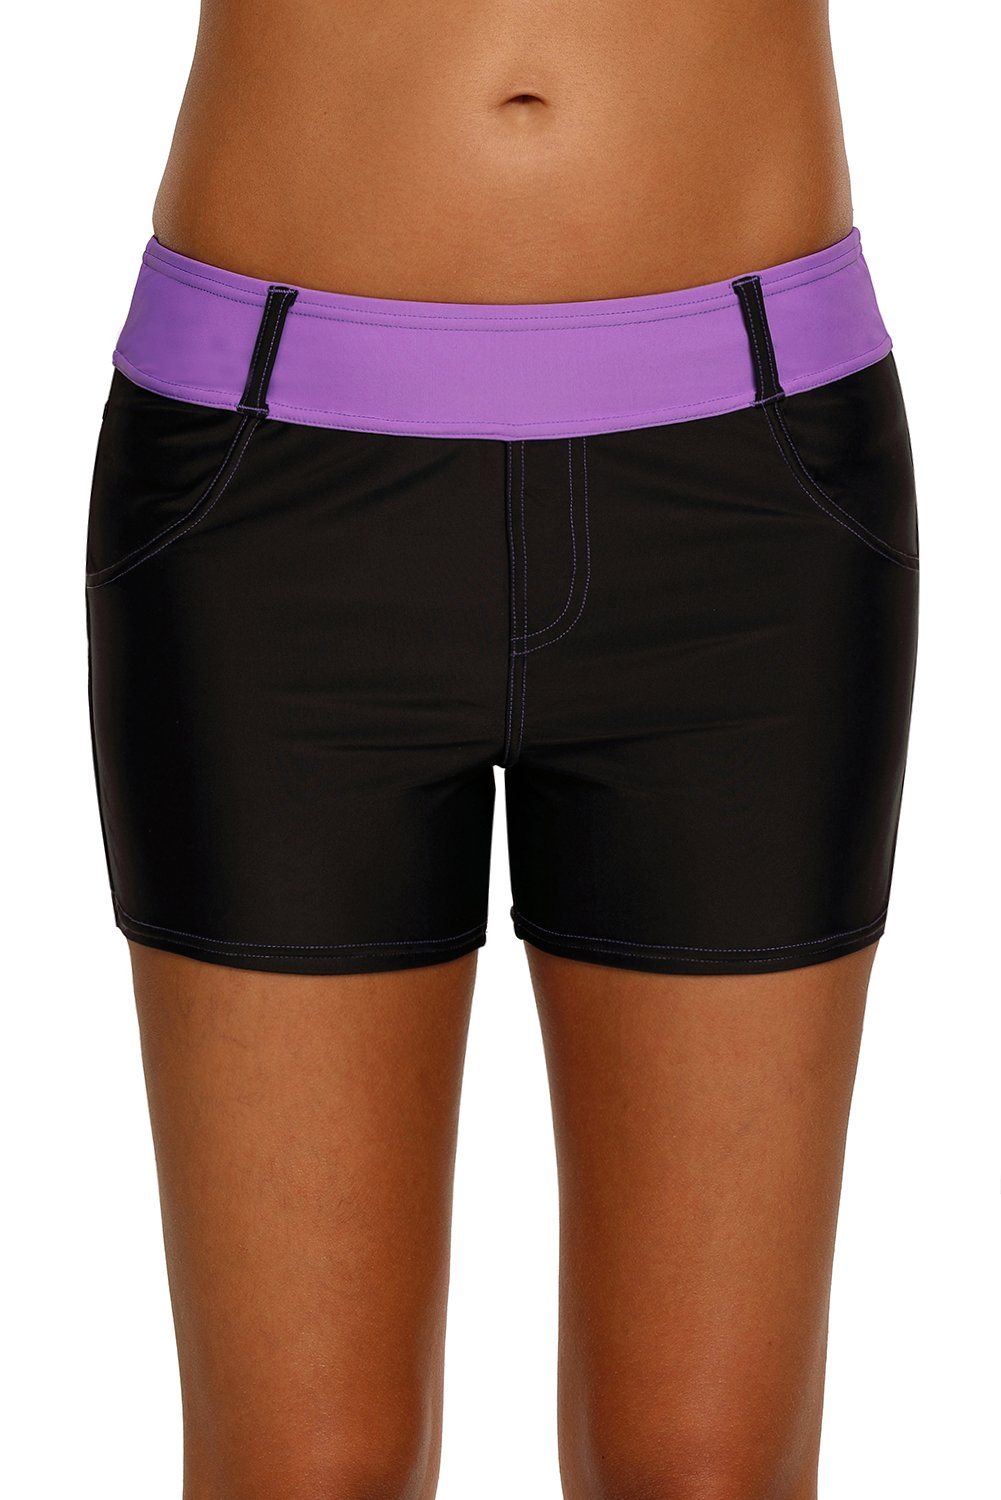 Women Black Swim Board Shorts Purple Waistband Tankini Bottoms Slim Fitted Bikini Trunks - KaleaBoutique.com